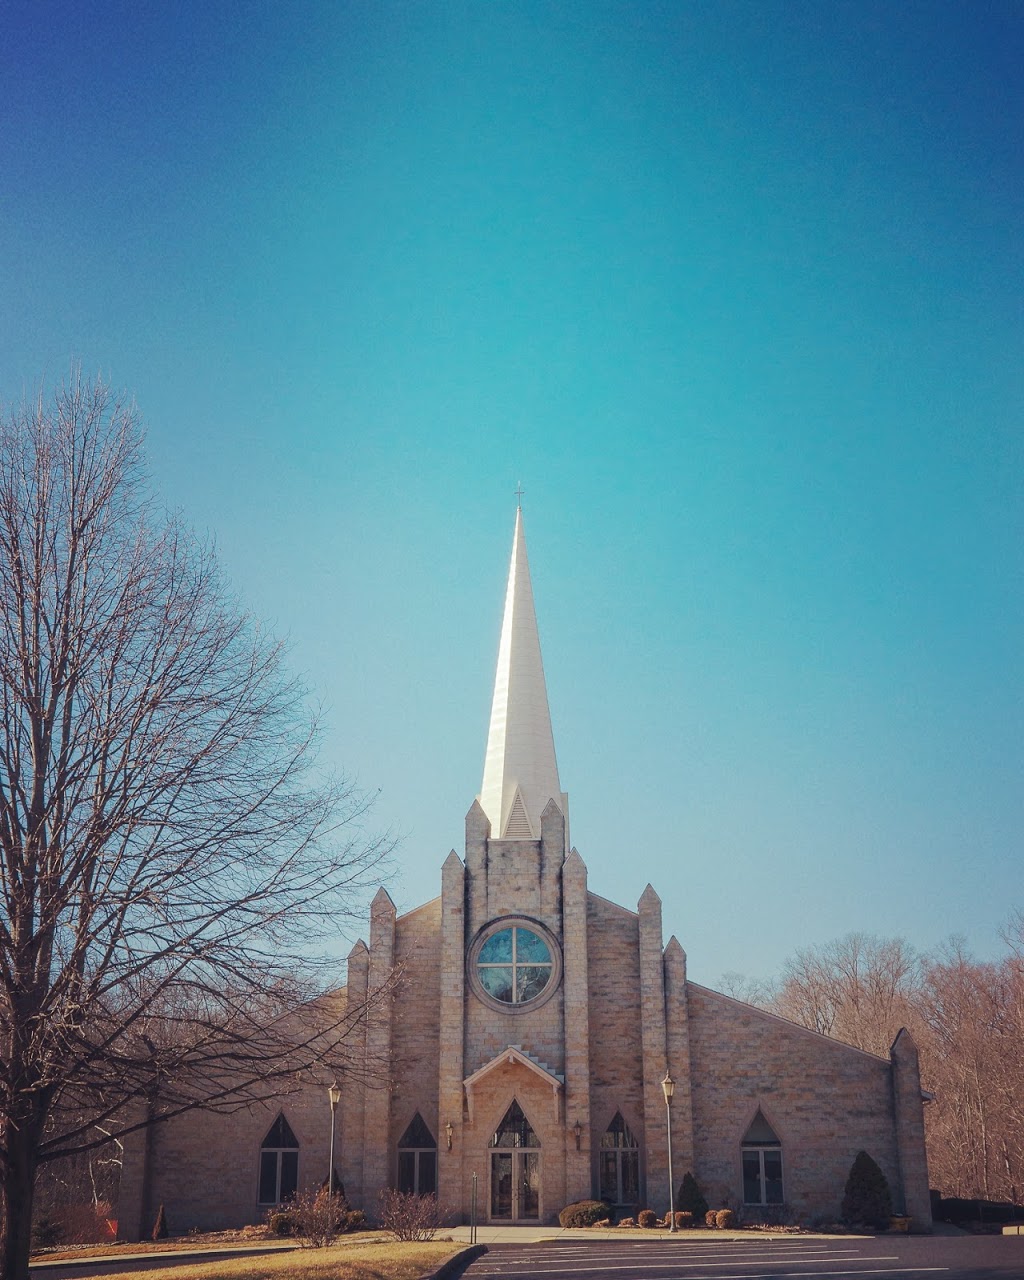 Loveland United Methodist Church - church  | Photo 1 of 1 | Address: 10975 S Lebanon Rd, Loveland, OH 45140, USA | Phone: (513) 683-1738